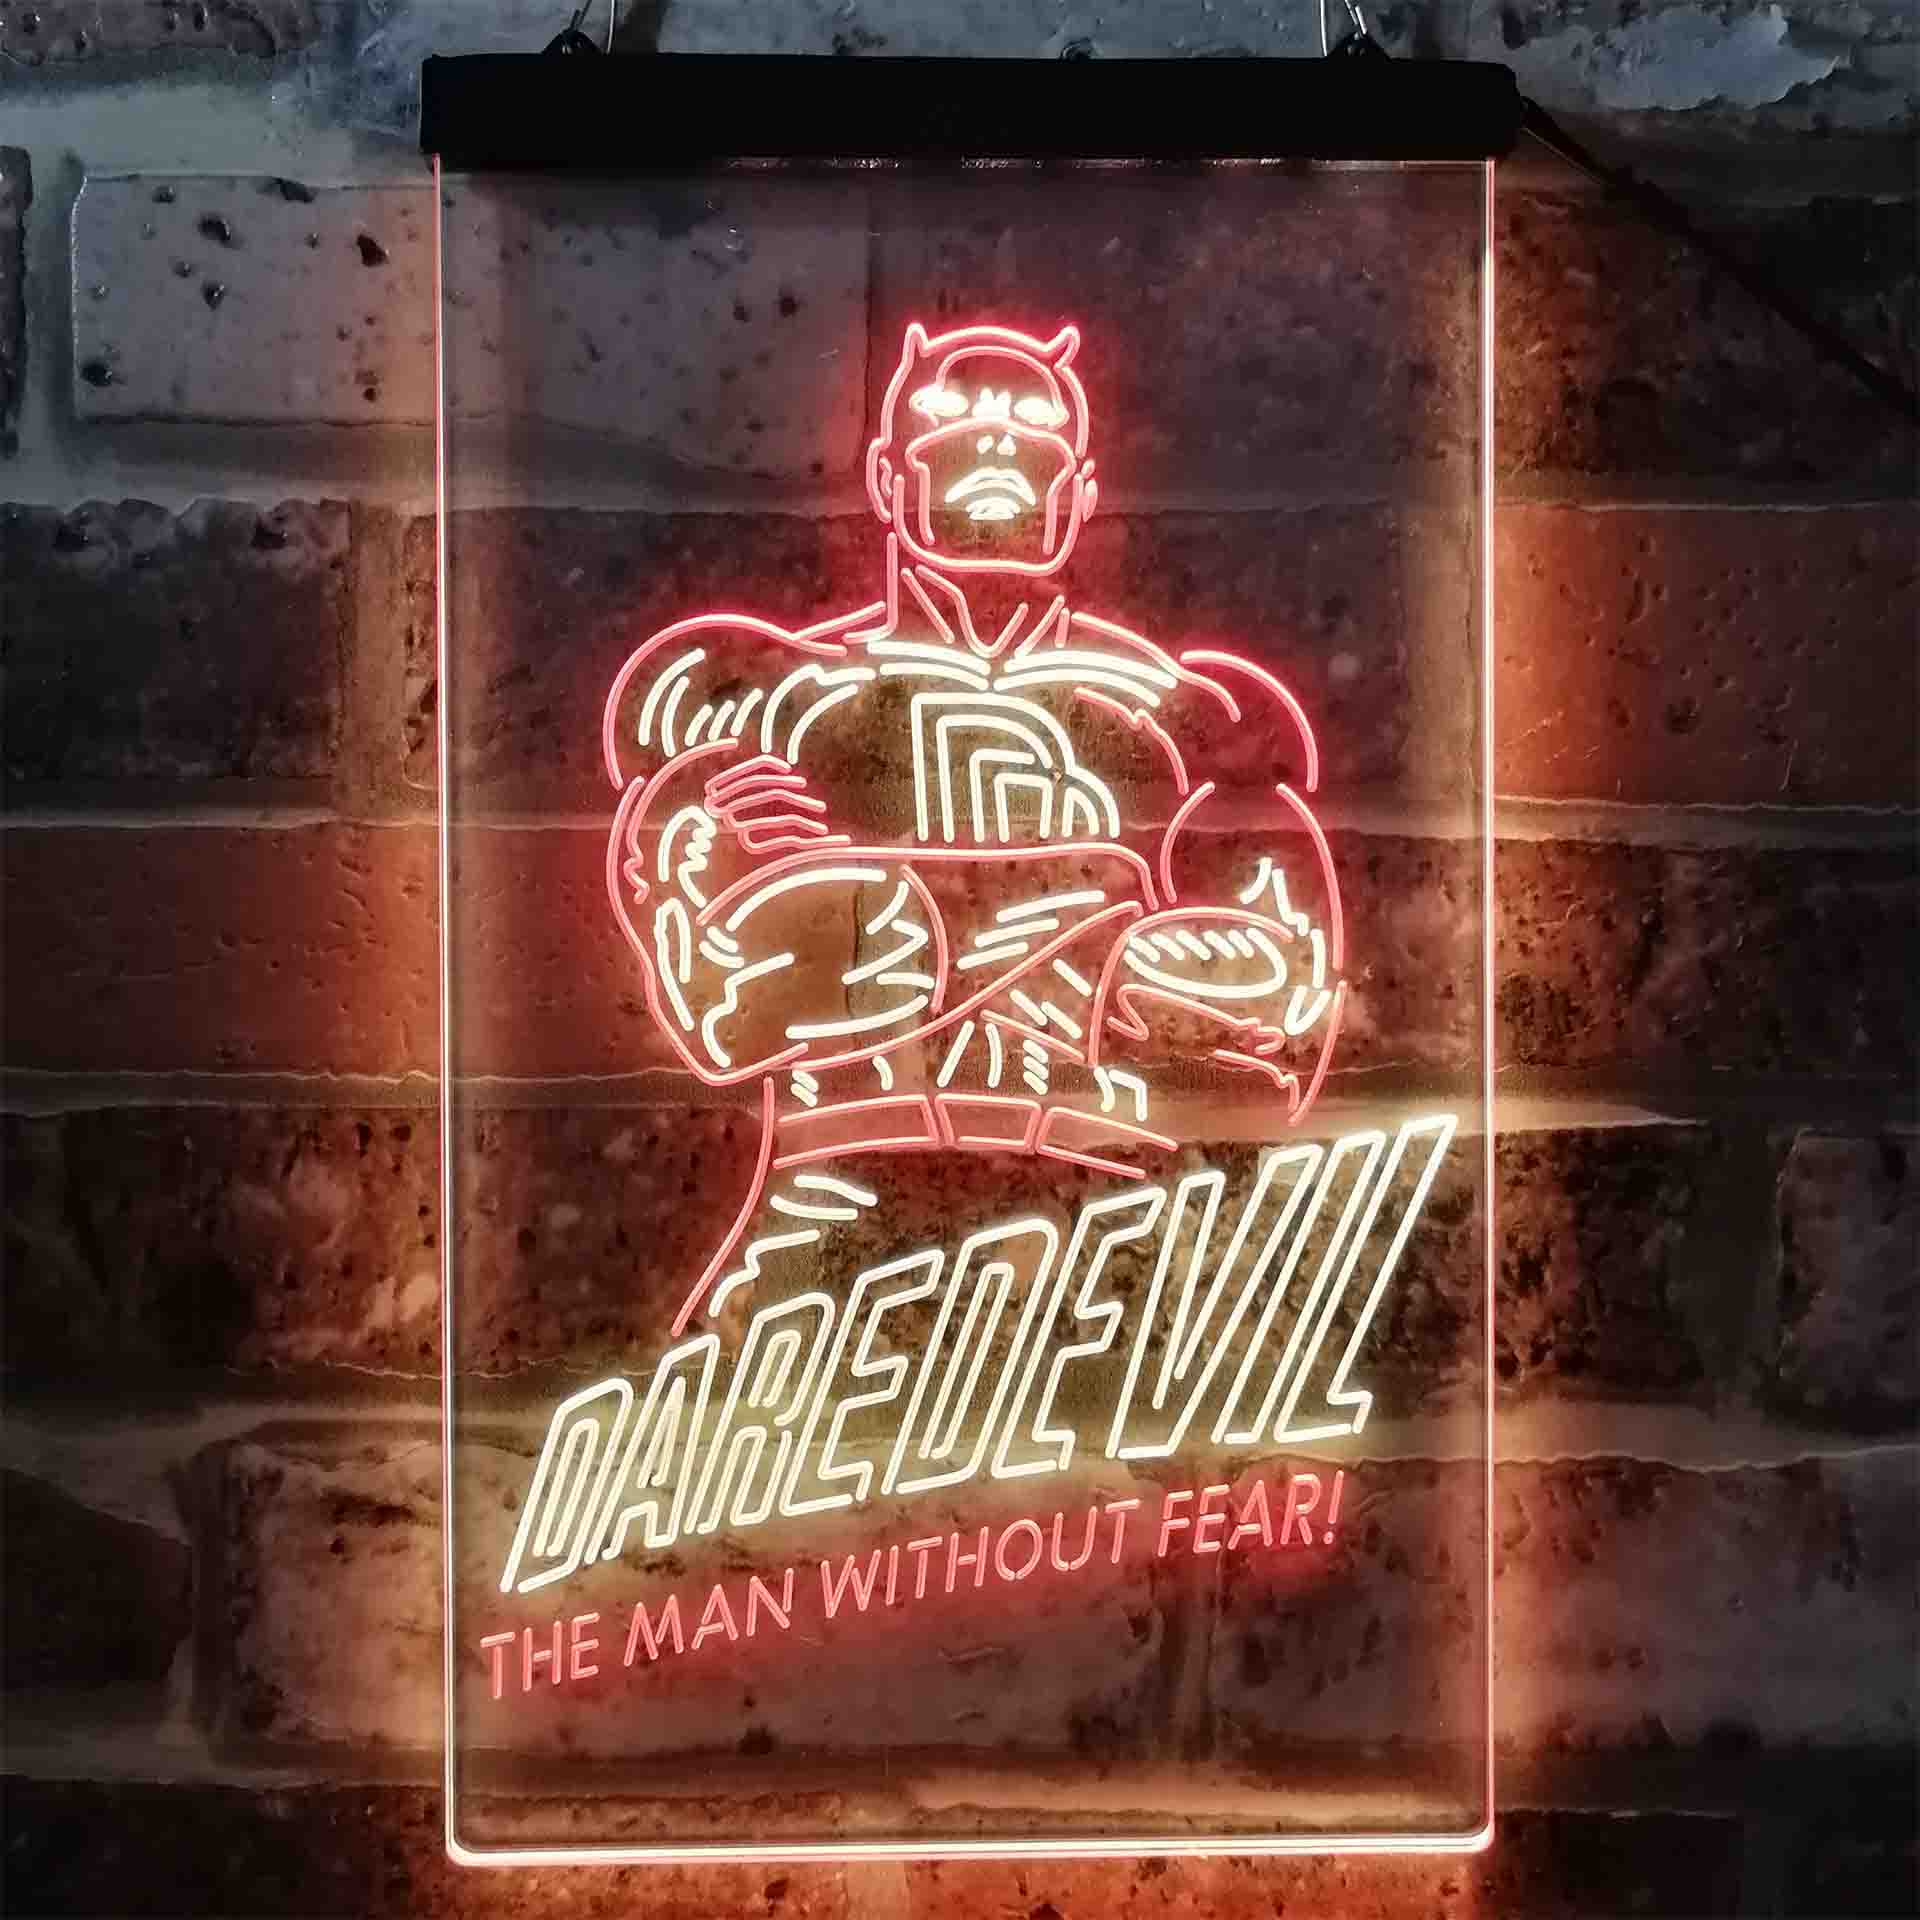 Daredevil Dual Color LED Neon Sign ProLedSign